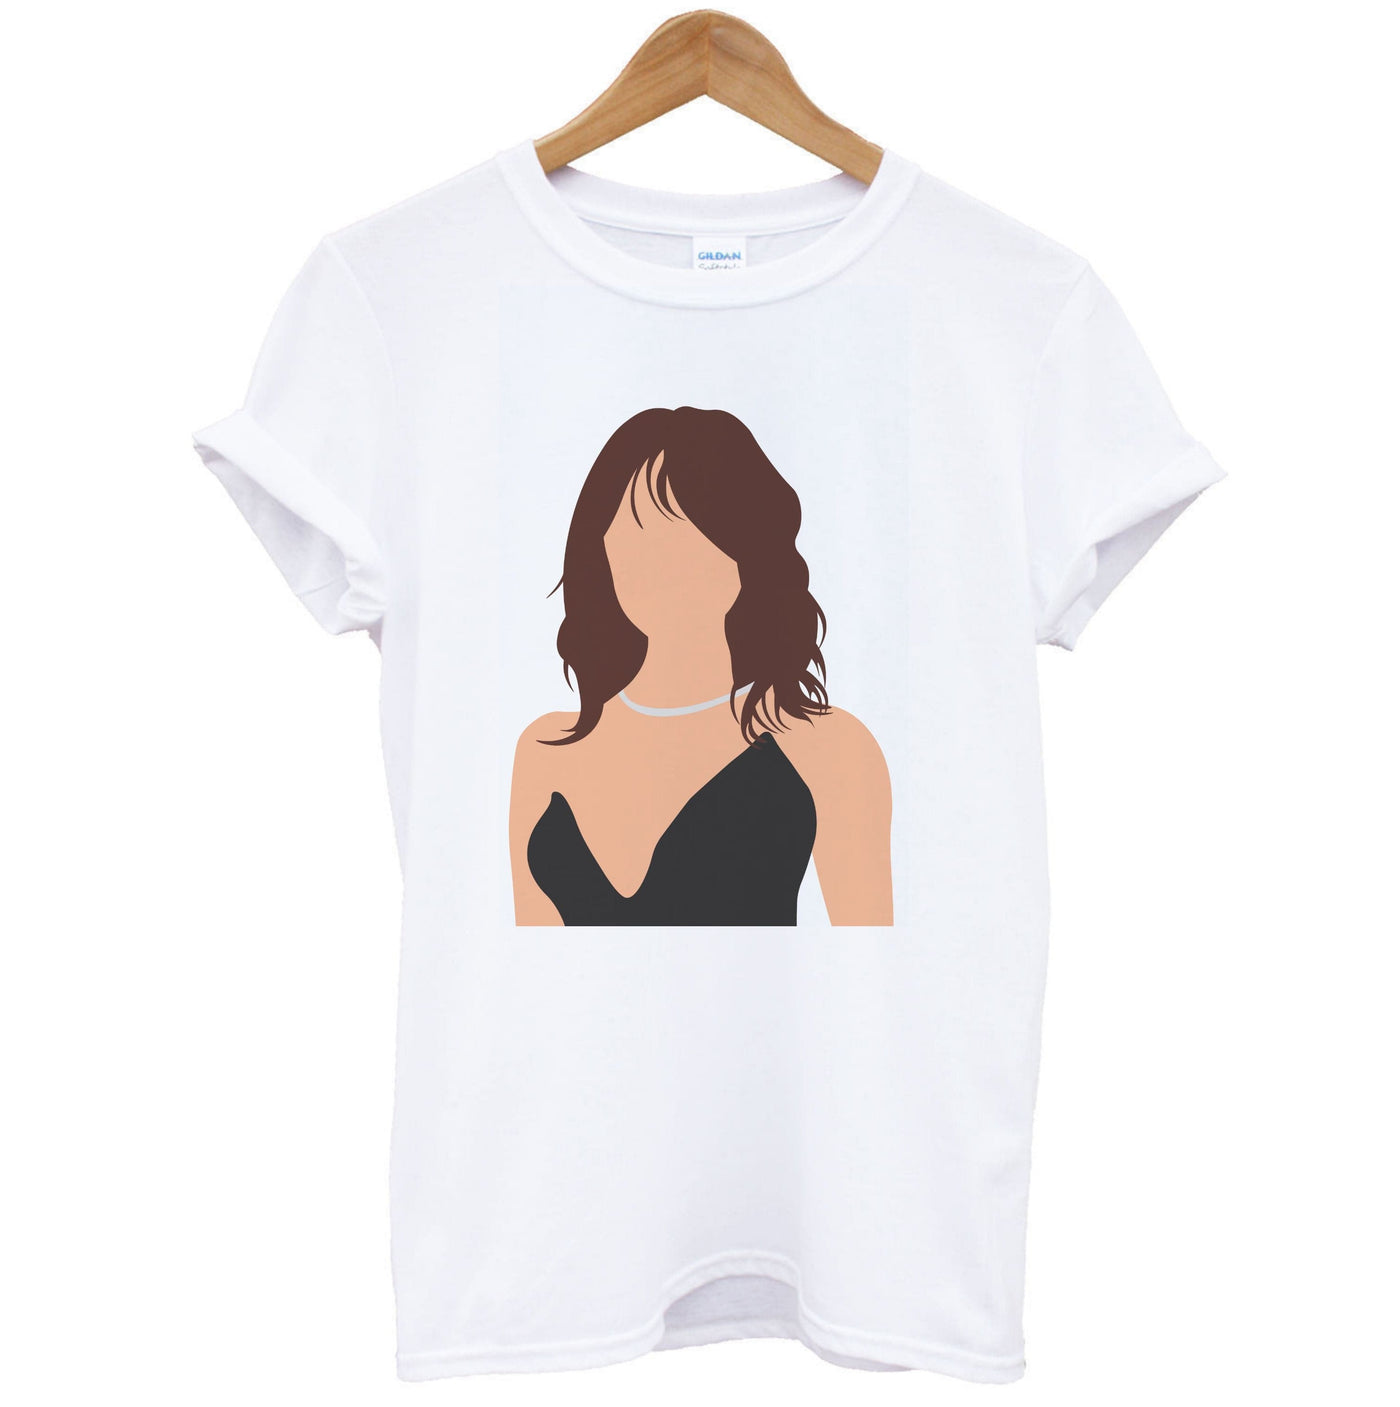 Dress - Jenna Ortega T-Shirt